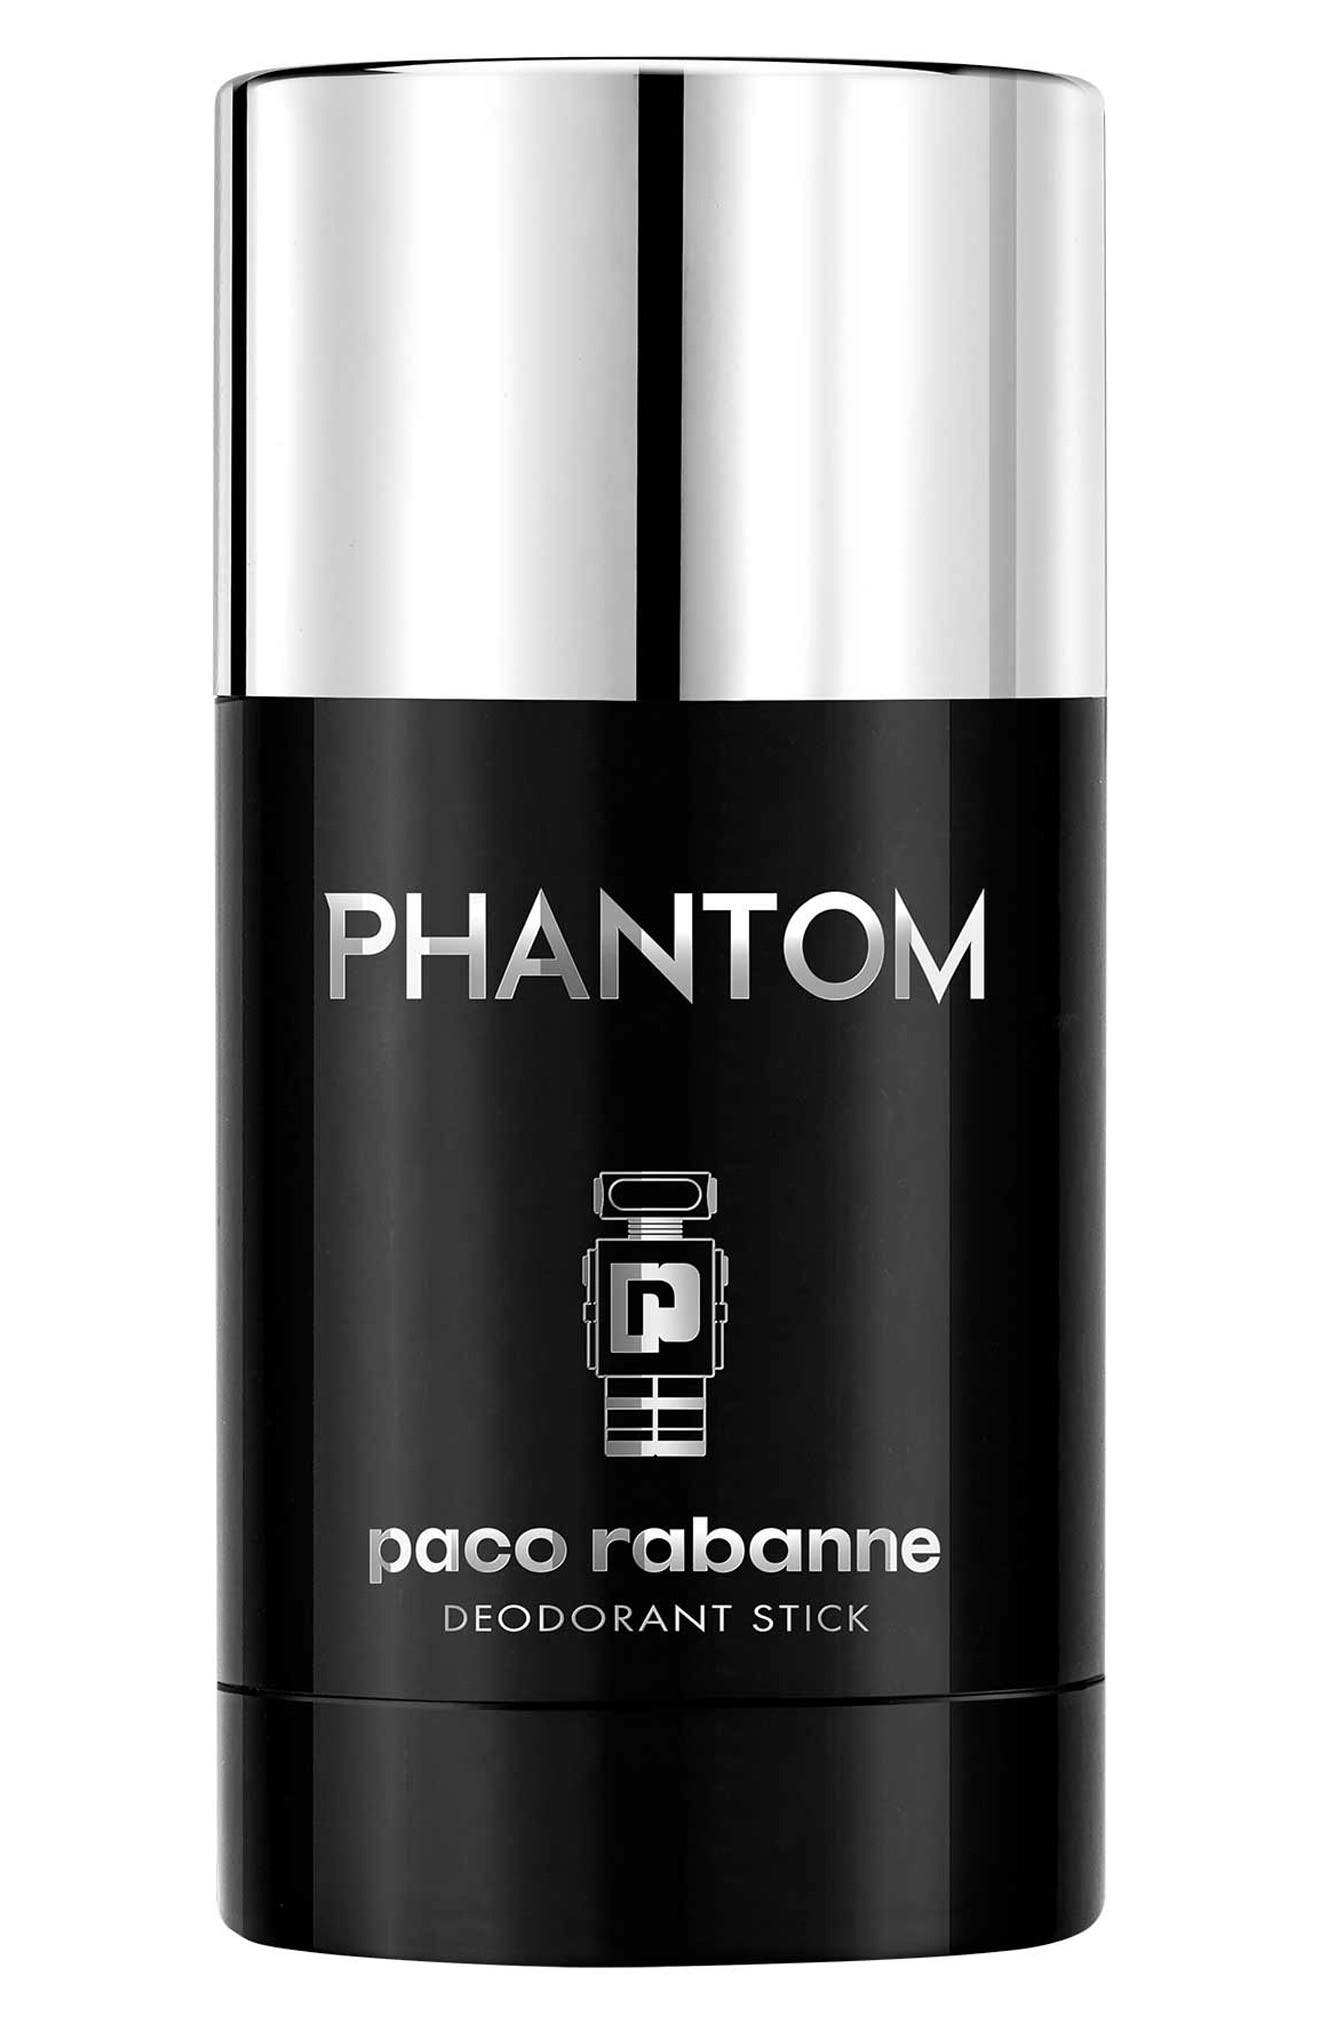 paco rabanne Phantom Deodorant Stick at Nordstrom, Size 2.5 Oz